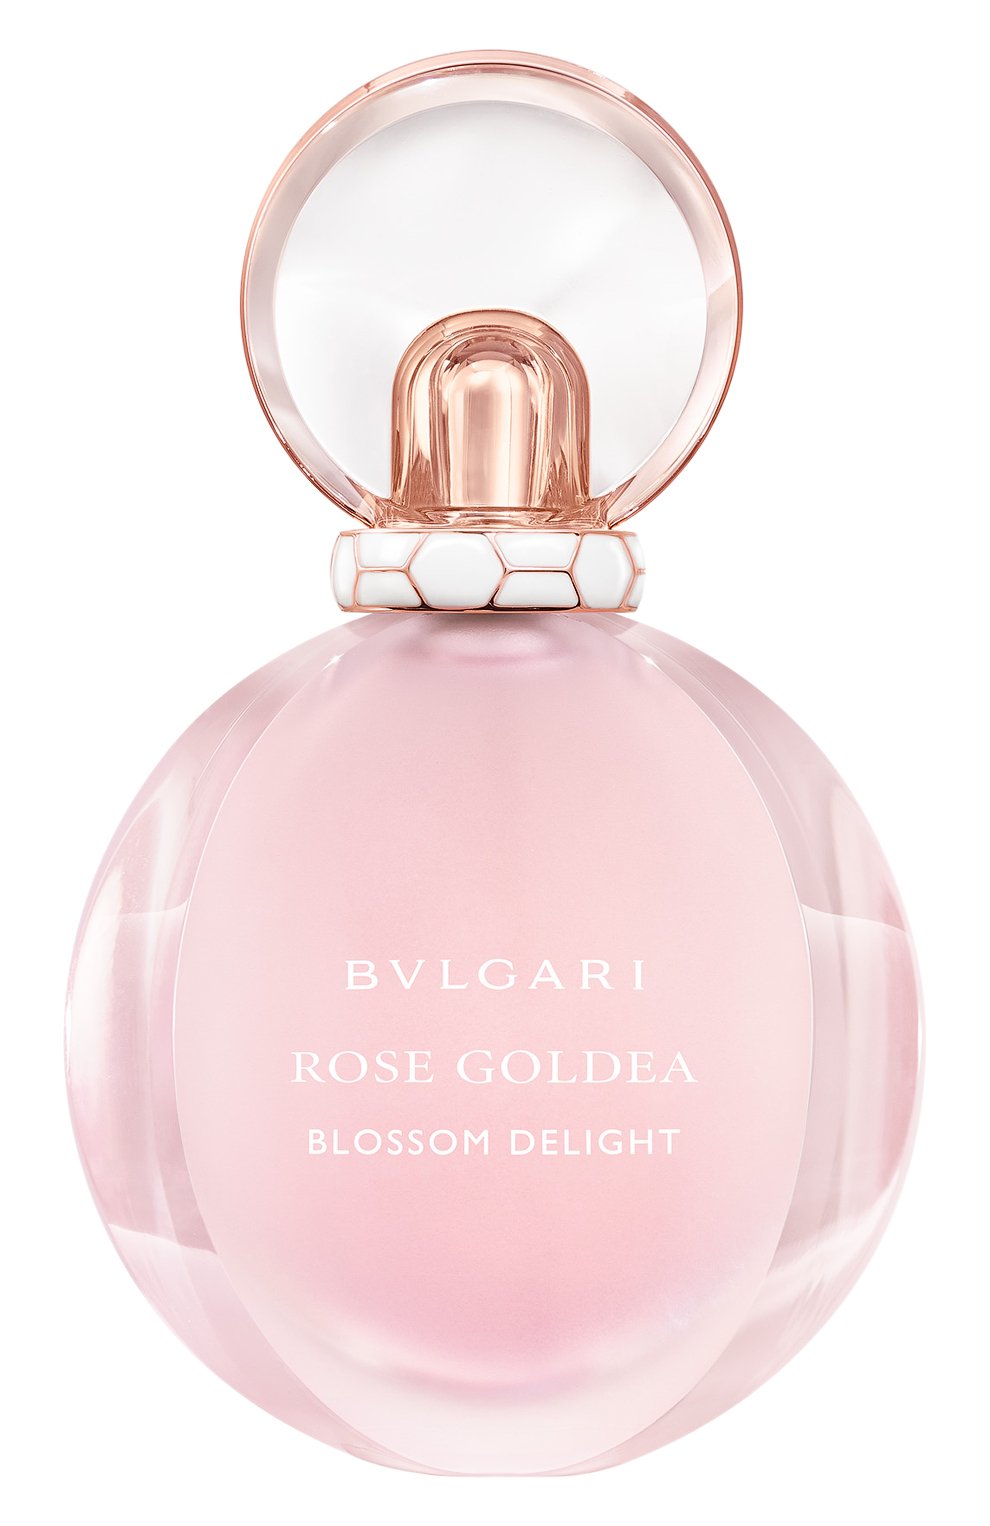 Bvlgari blossom delight. Bvlgari Rose Goldea.